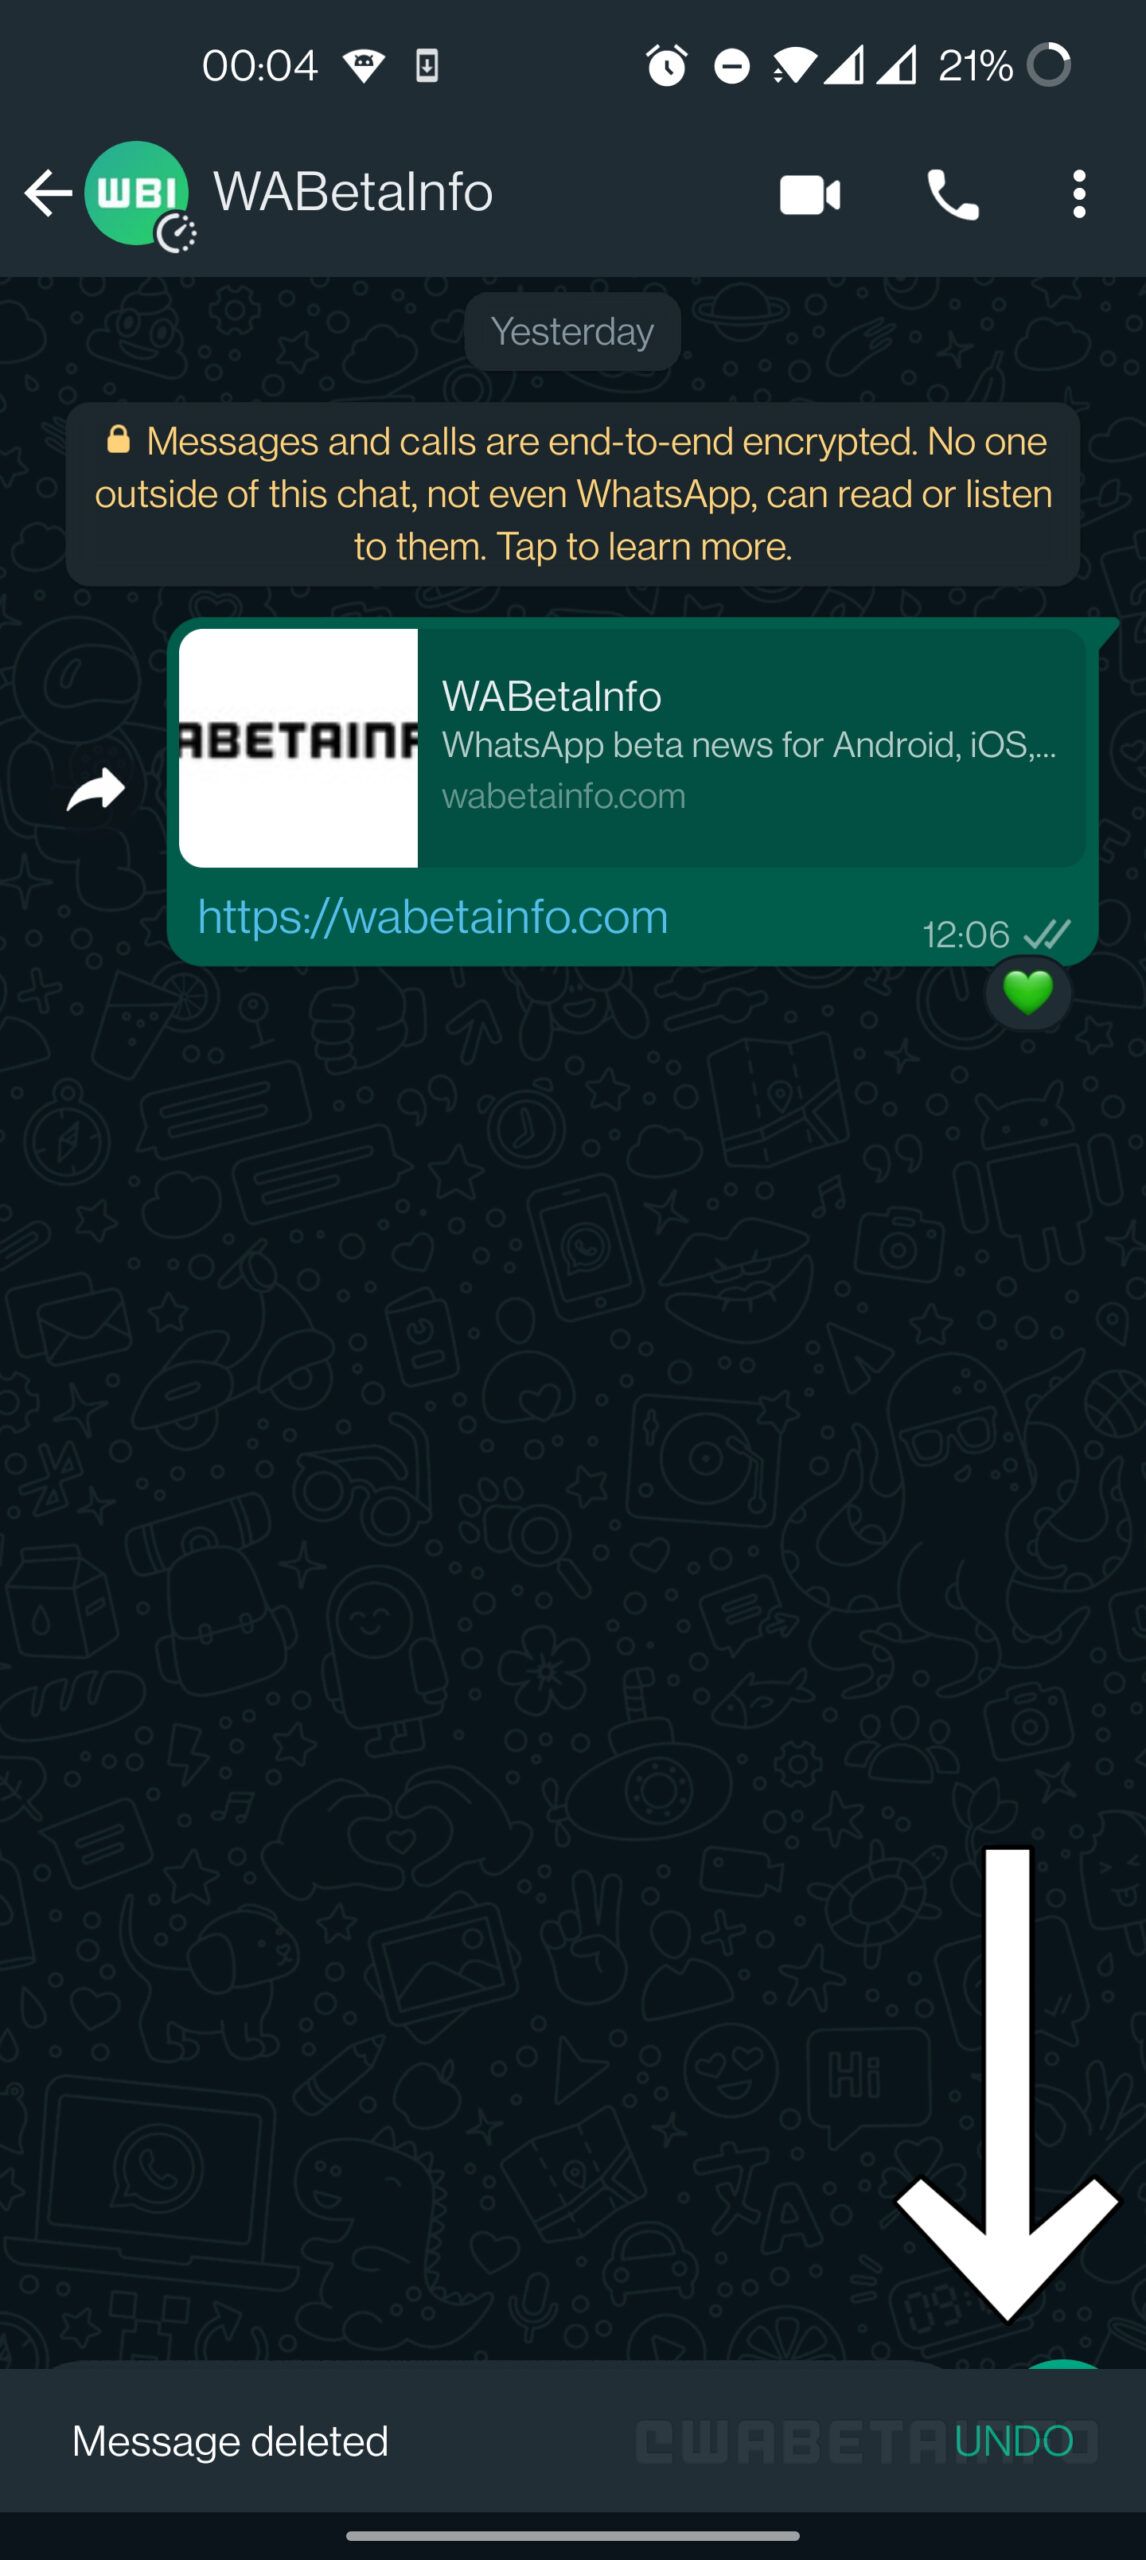 WhatsApp dapat membuat fitur "Batalkan penghapusan" untuk memulihkan pesan yang dihapus